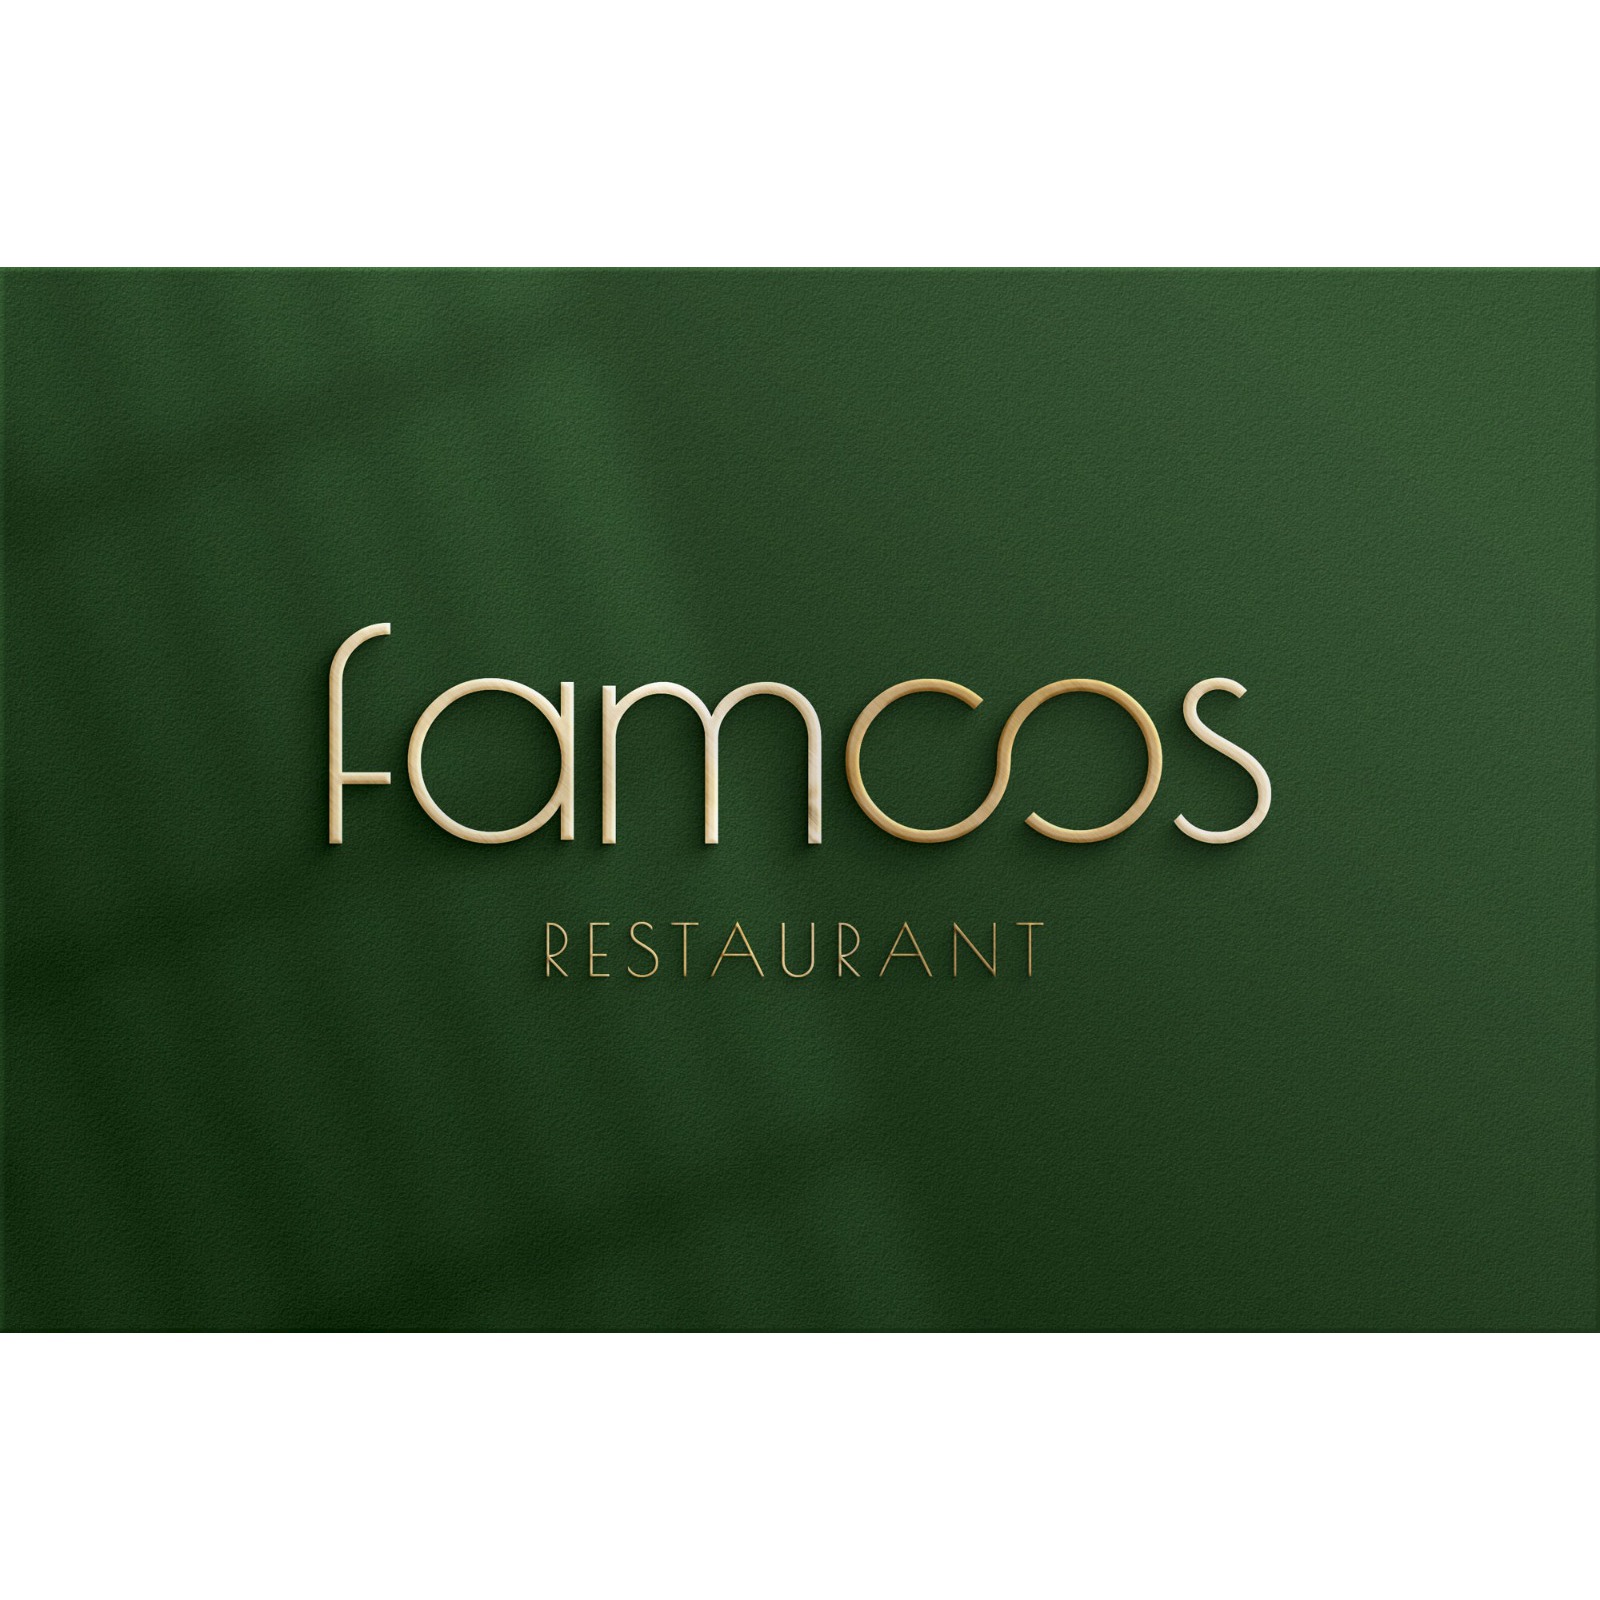 Famoos Restaurant in Laatzen - Logo